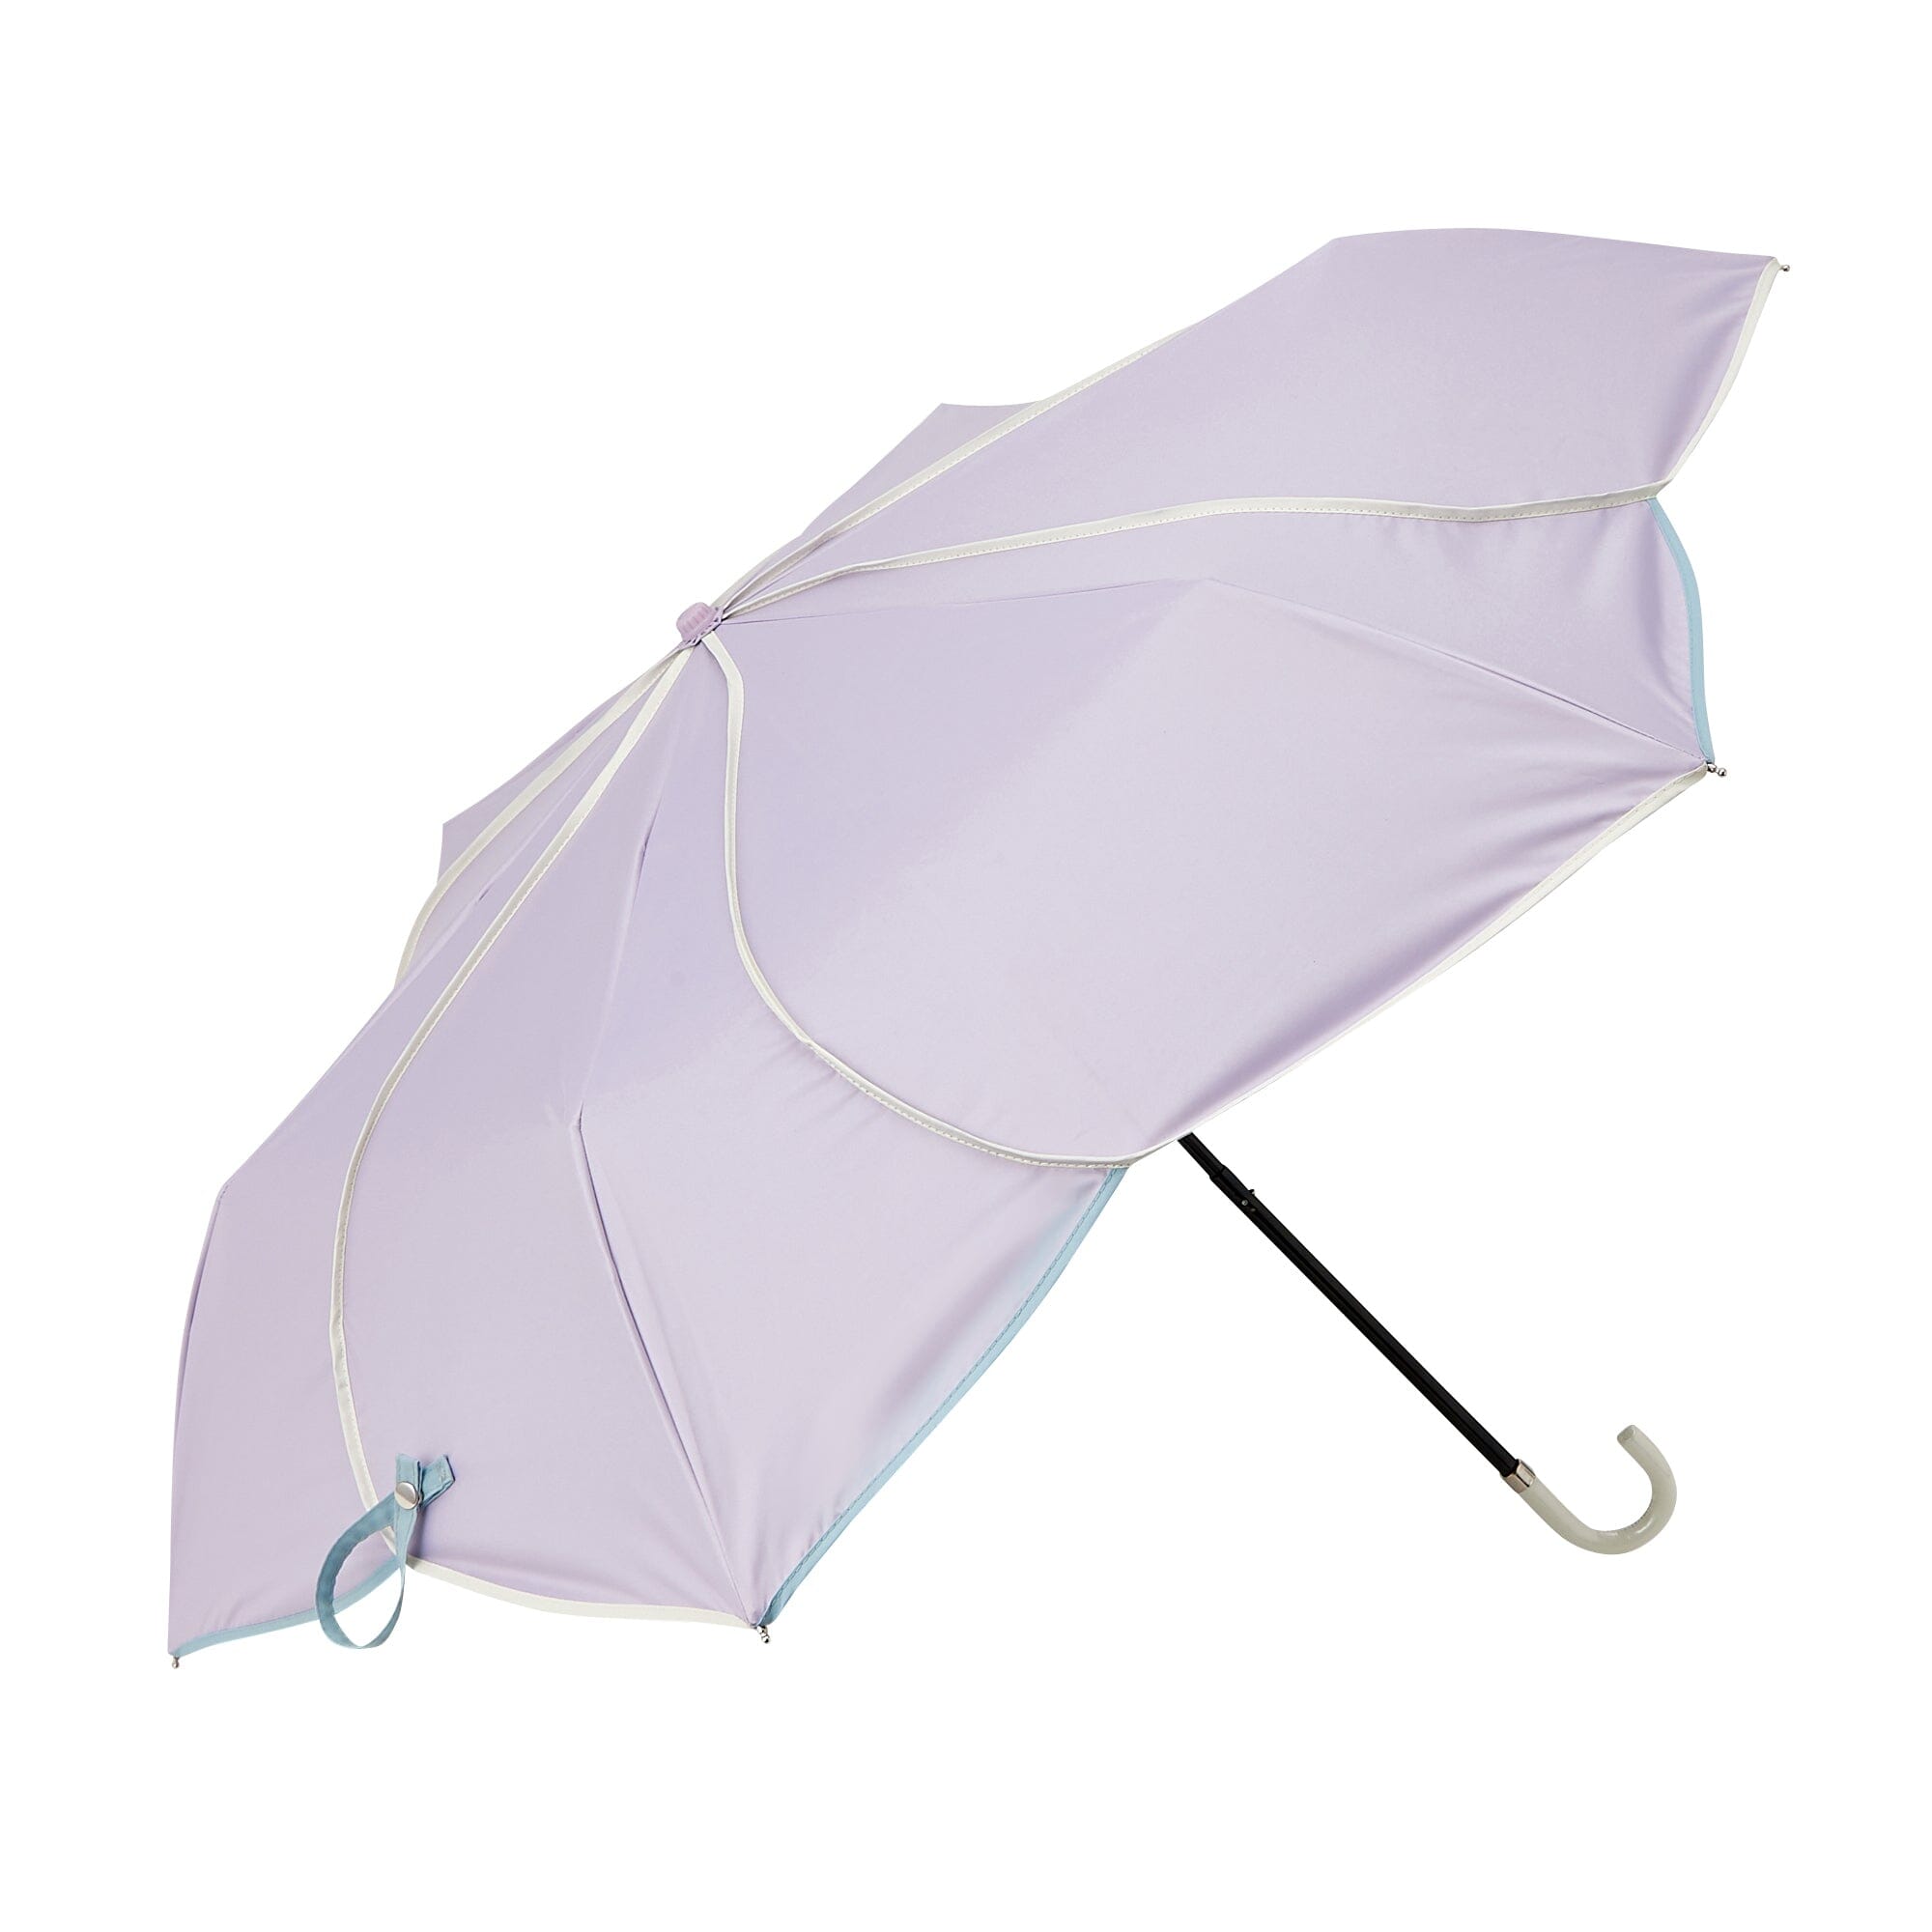 BICOLOR 雙色折疊晴雨傘 47cm 紫色